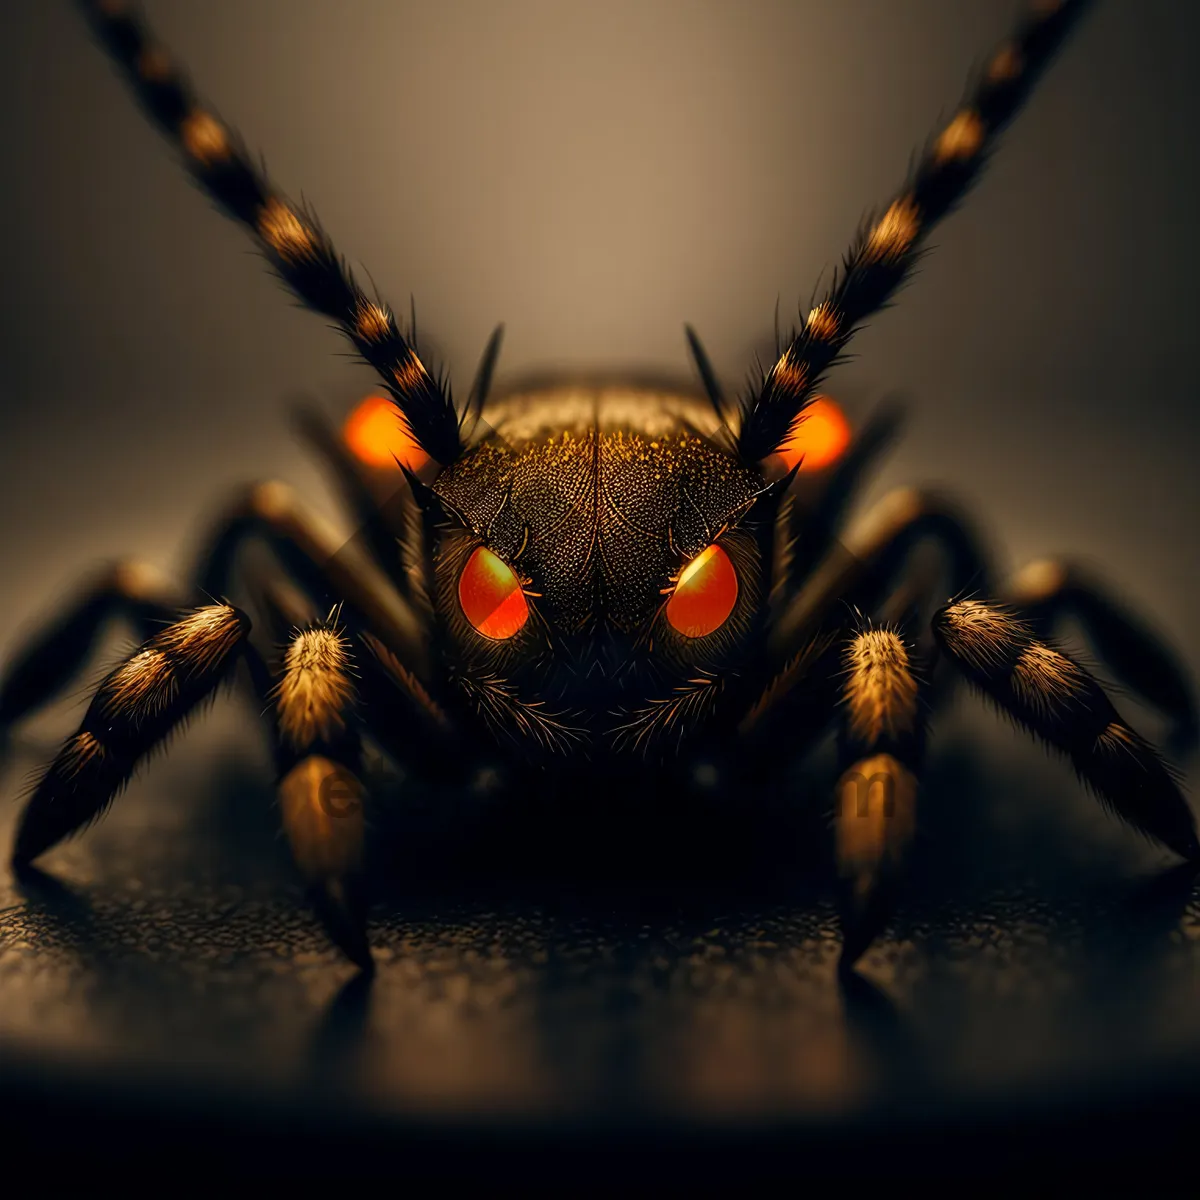 Picture of Black Widow Arachnid with Piercing Black Eyes